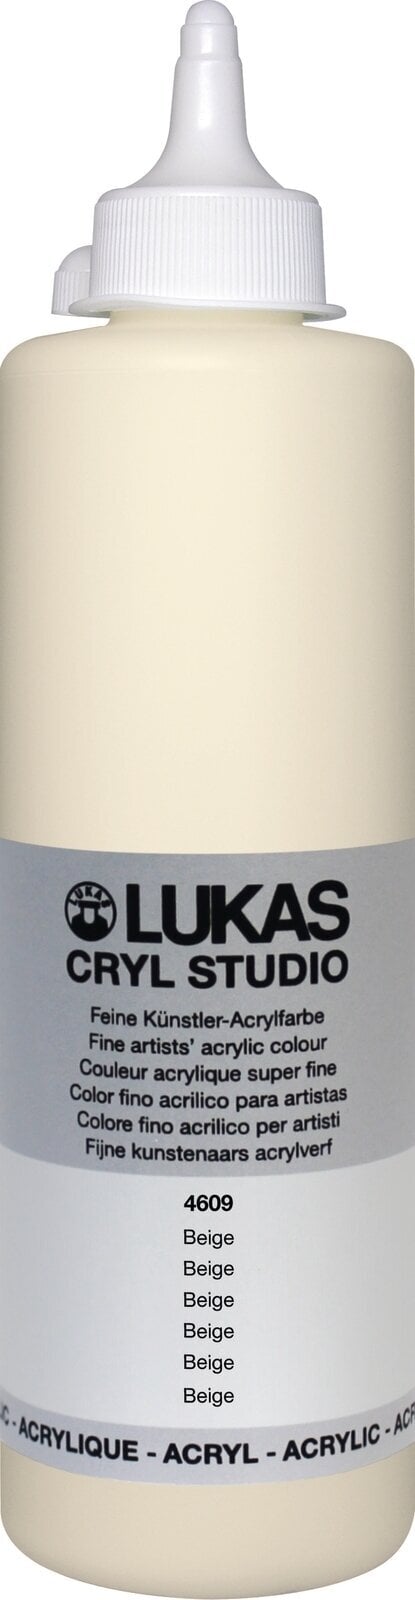 Acrylic Paint Lukas Cryl Studio Plastic Bottle Acrylic Paint Beige 500 ml 1 pc